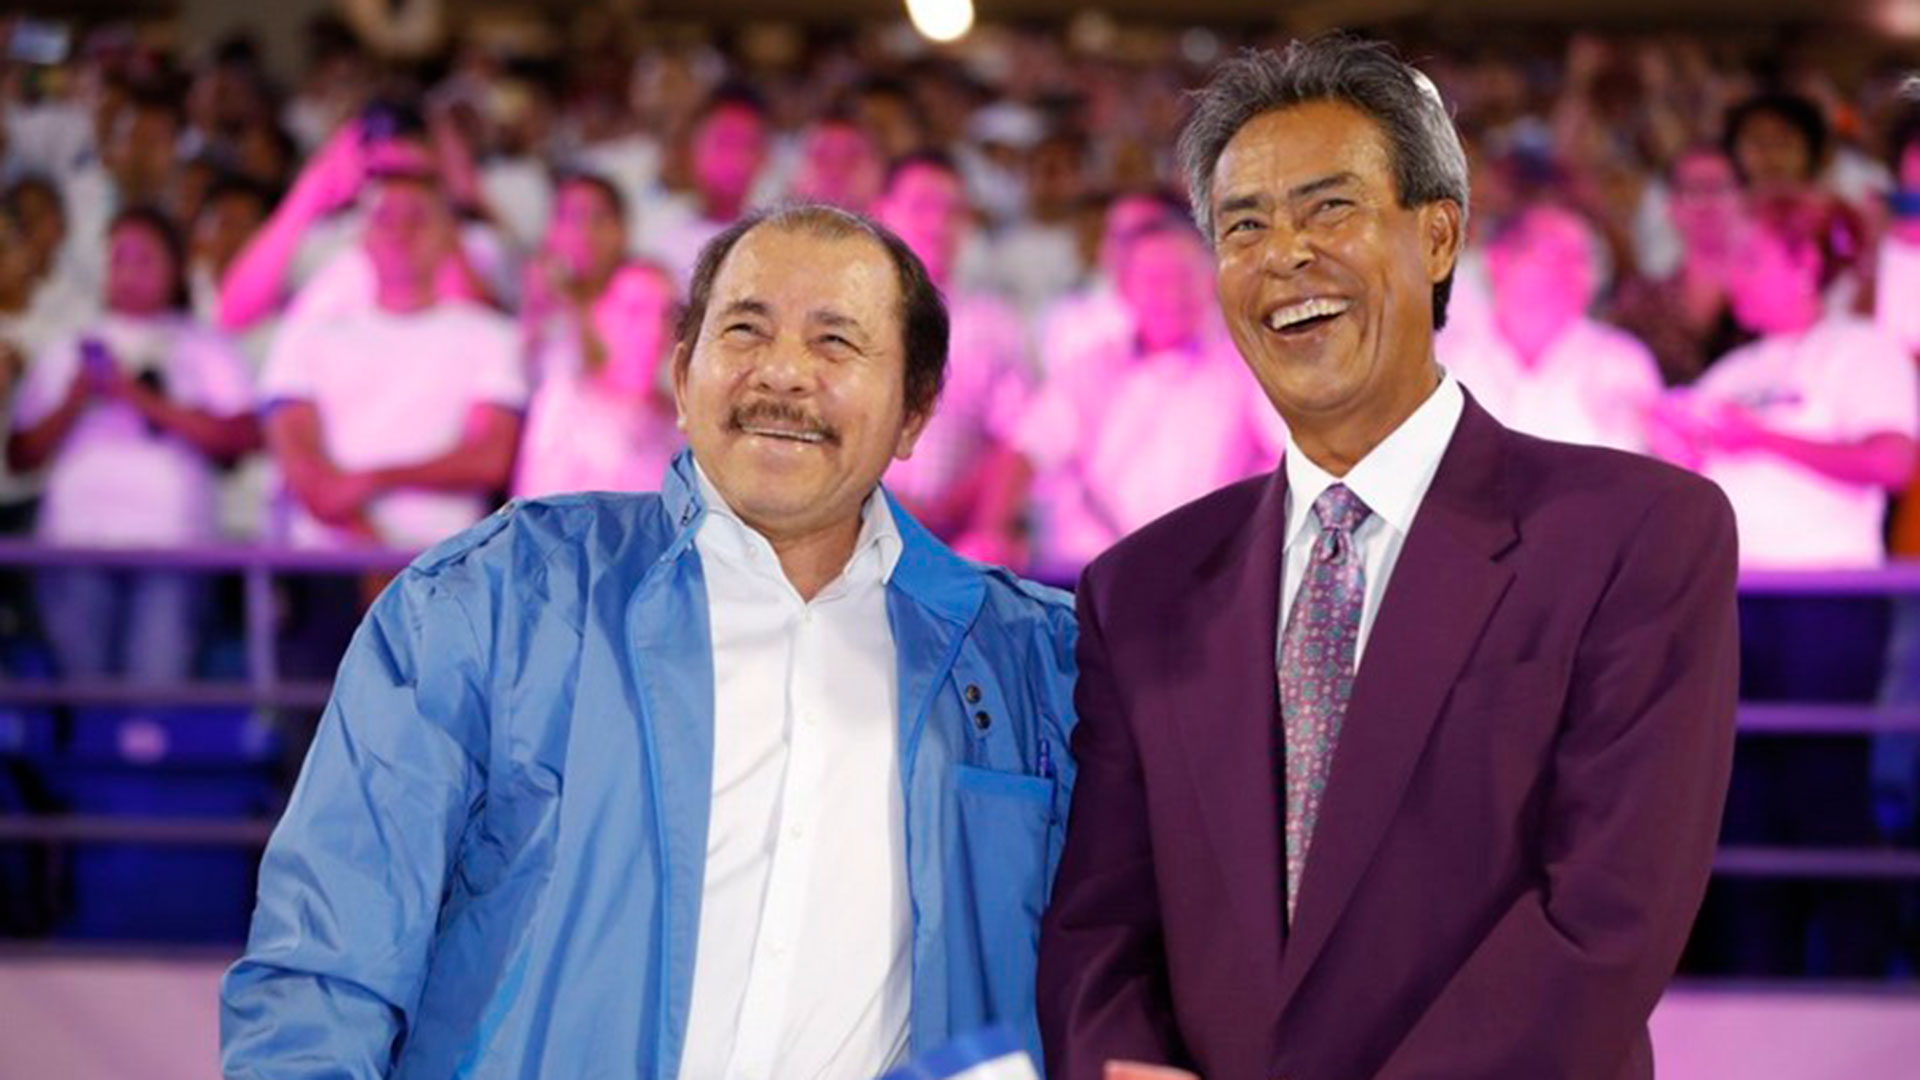 The crude revenge of Daniel Ortega against the biggest sports